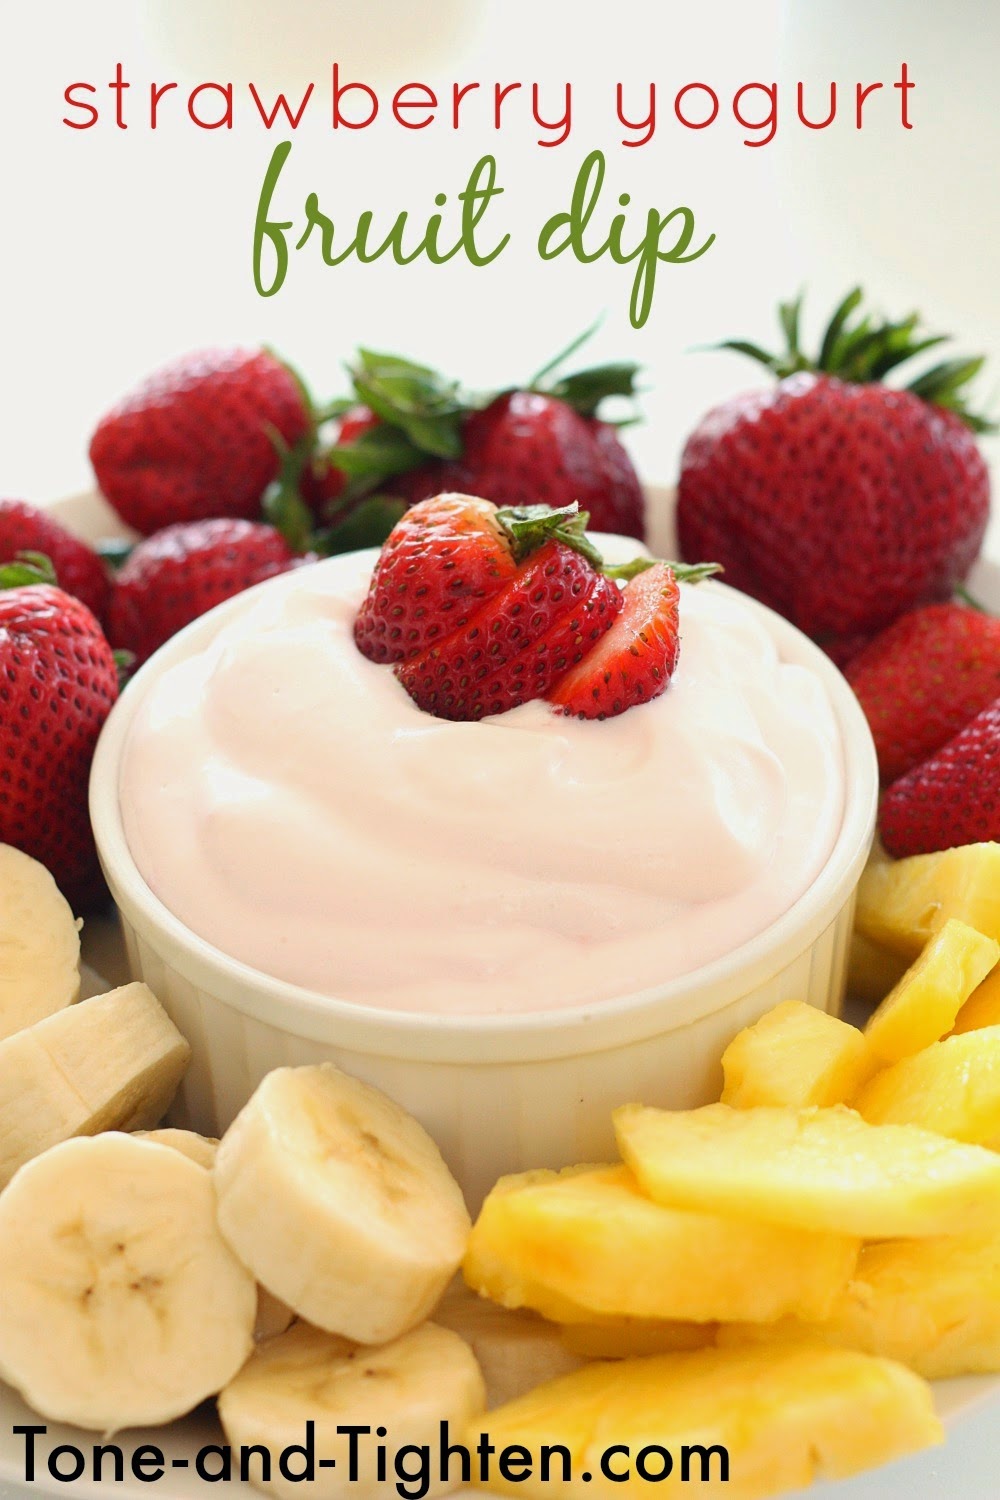 https://tone-and-tighten.com/2014/04/strawberry-yogurt-fruit-dip-recipe.html